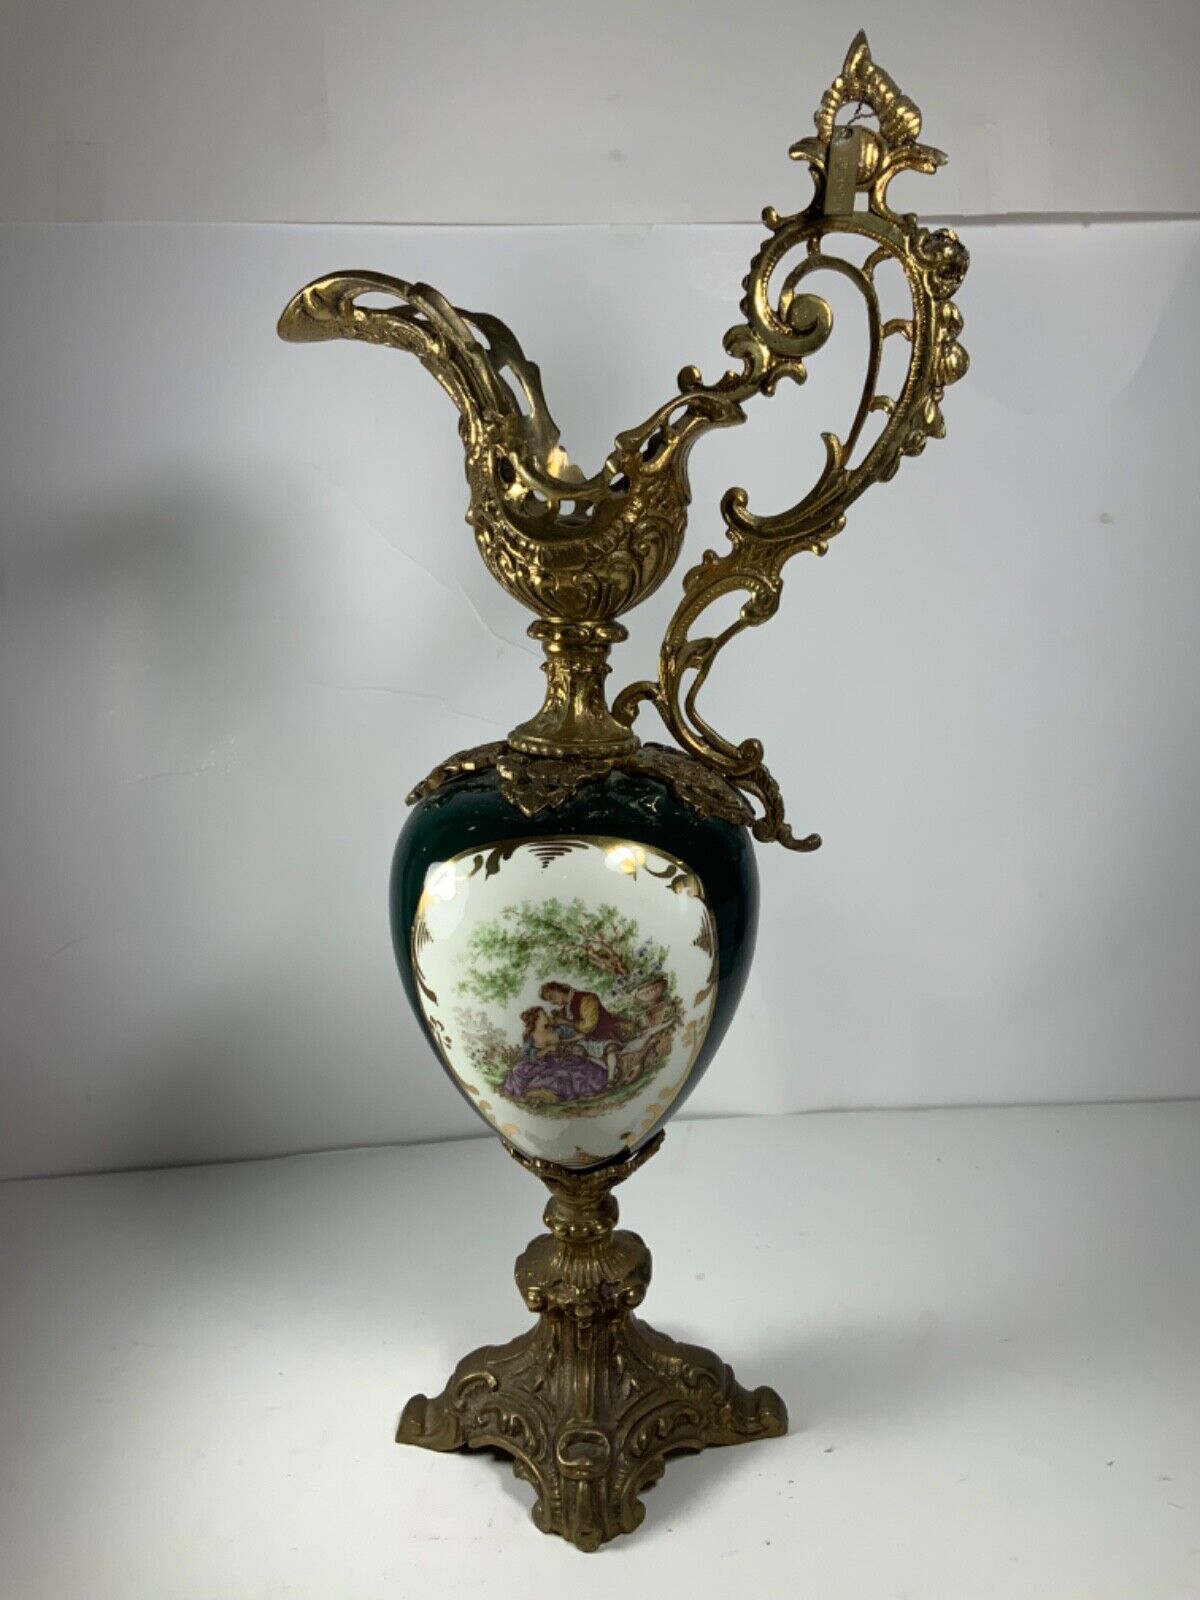 Antique Wavecrest Brass & Green Porcelain Mantle Ewer 16.5 in. Made In Spain